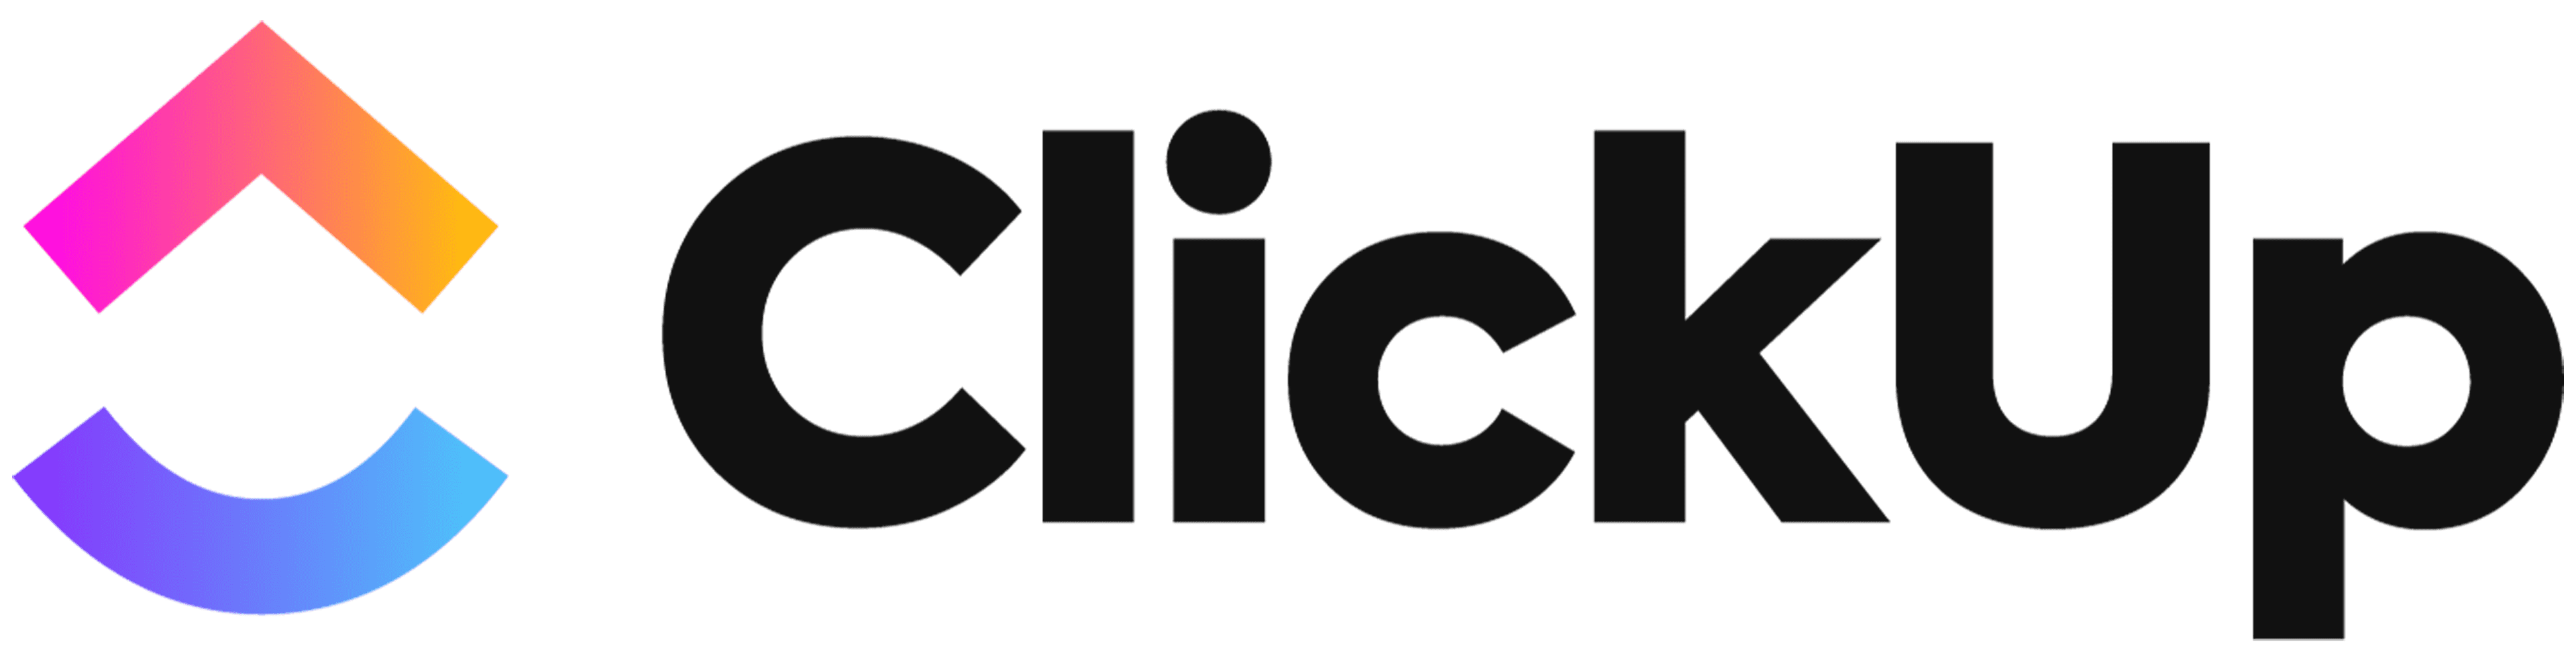 ClickUp-Logo